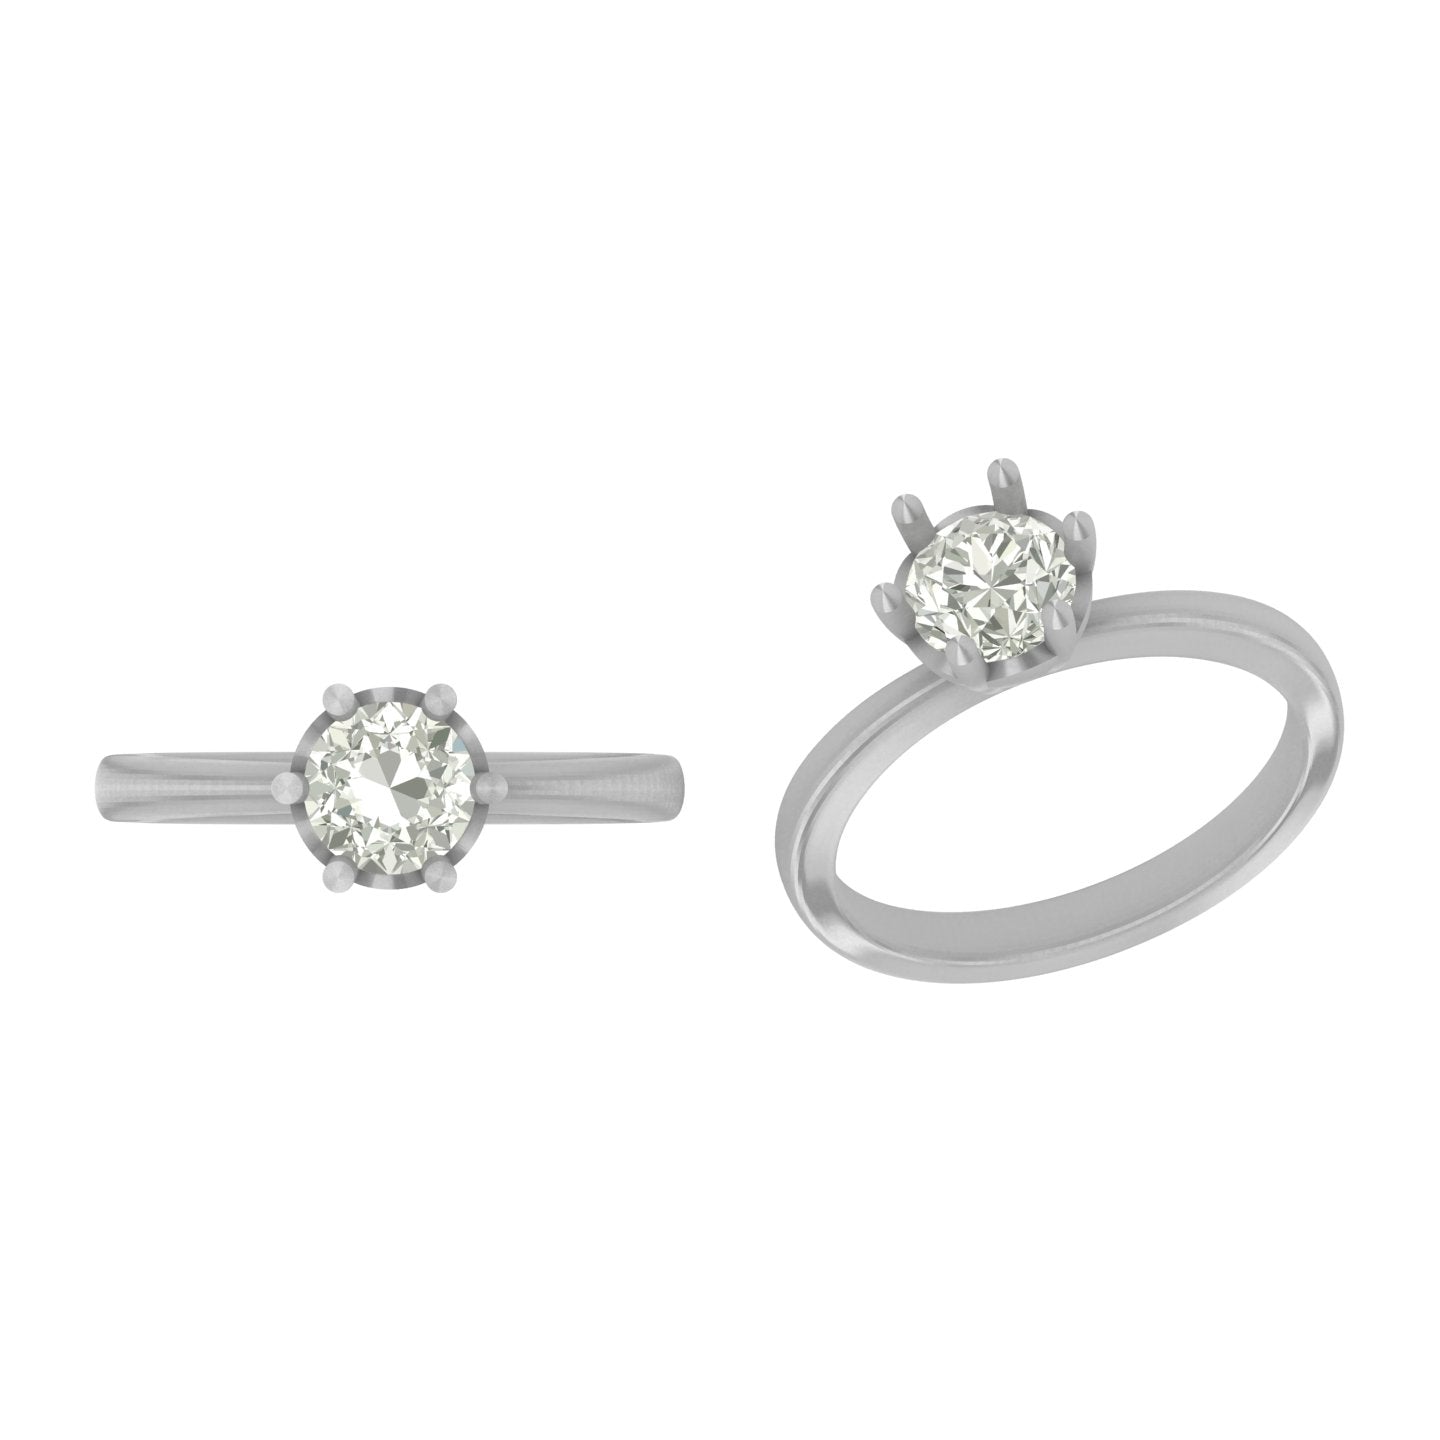 Quizo lab diamond ring for women